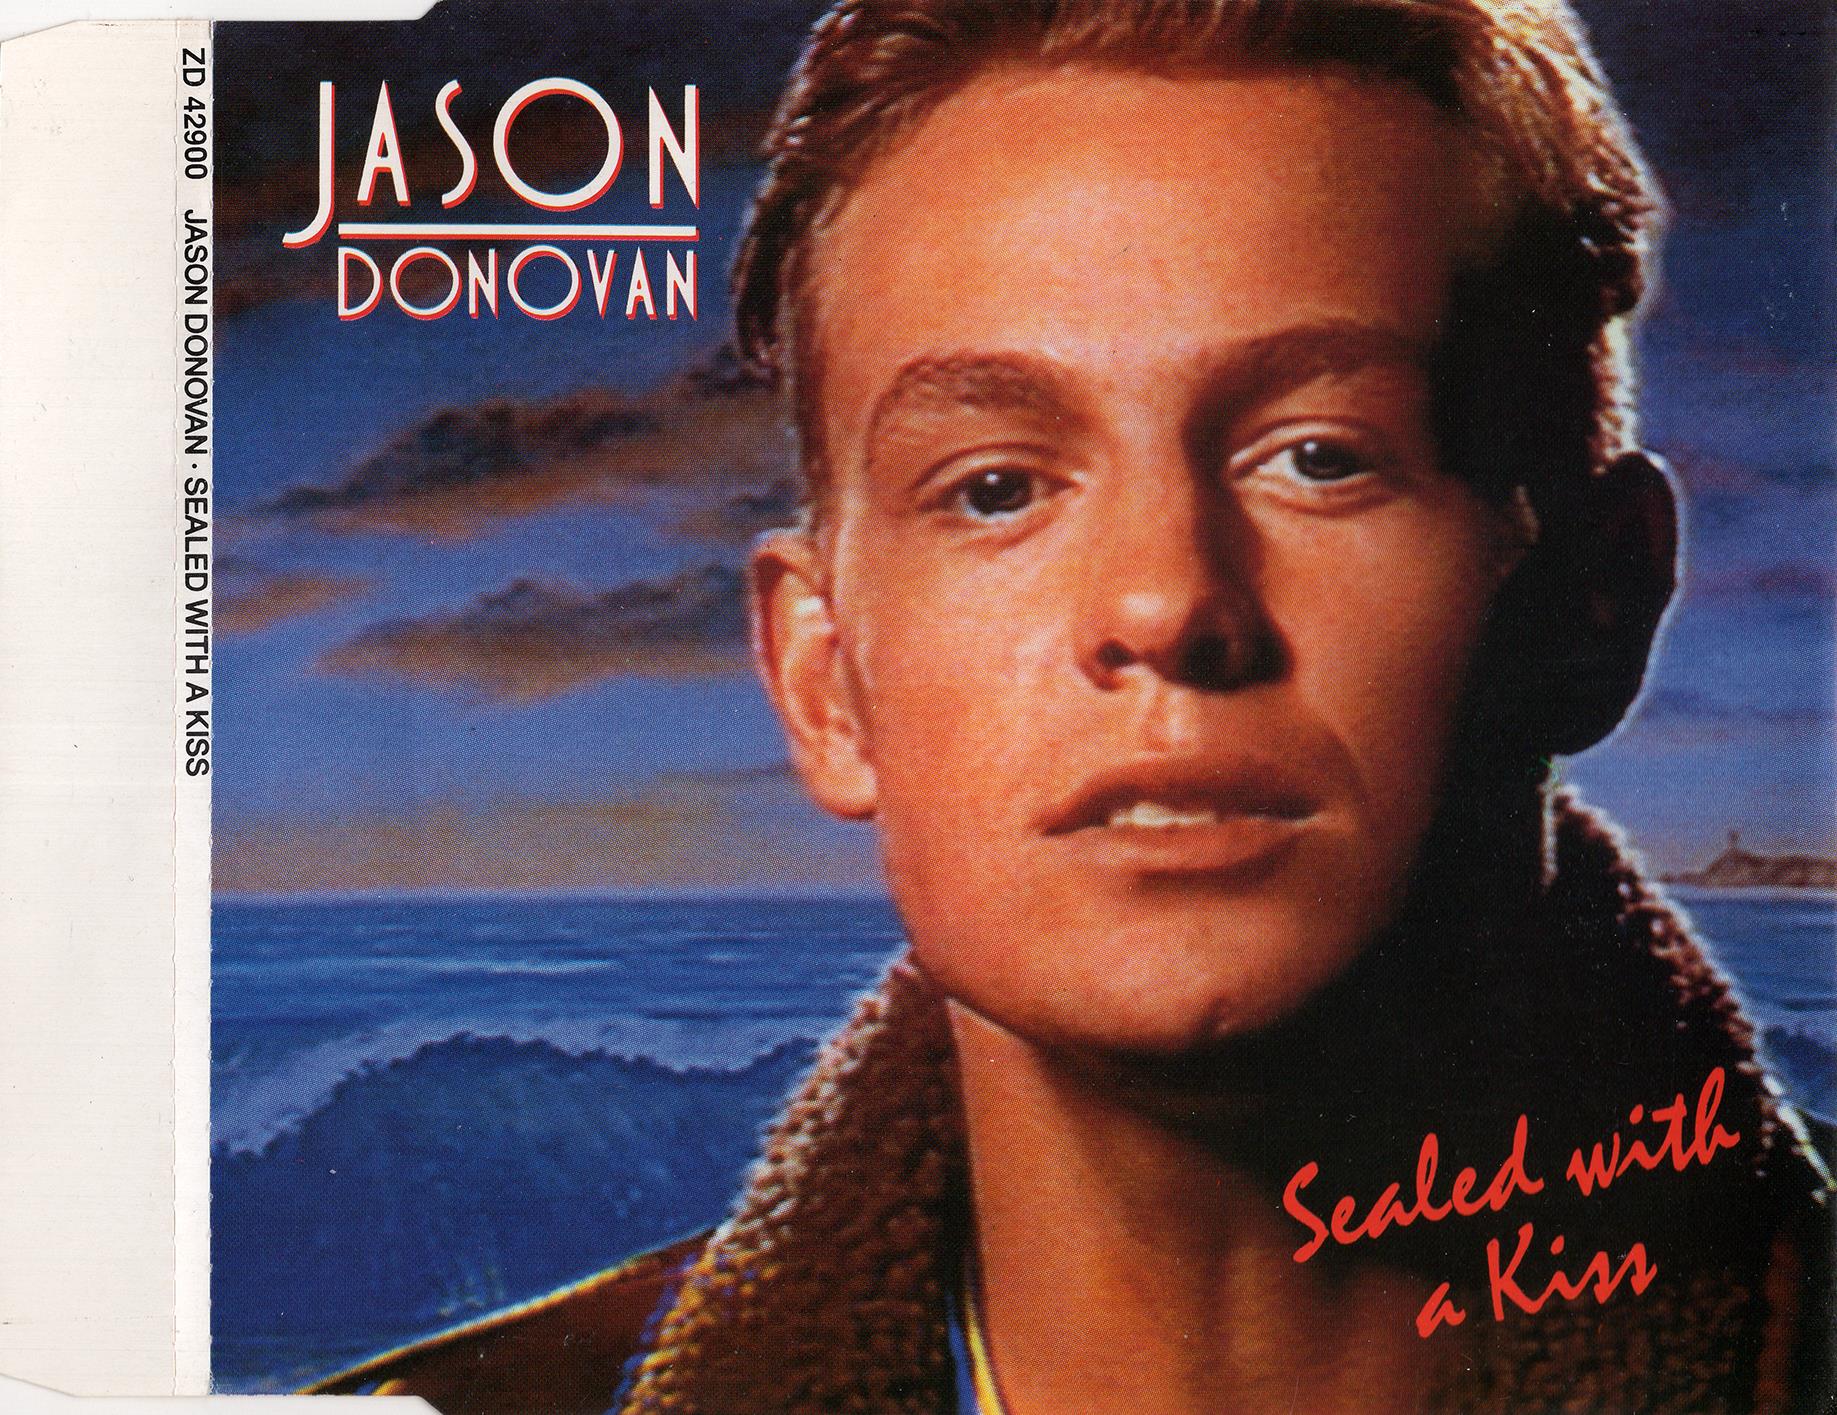 Jason Donovan - Sealed With A Kiss (Cdm)(1989)